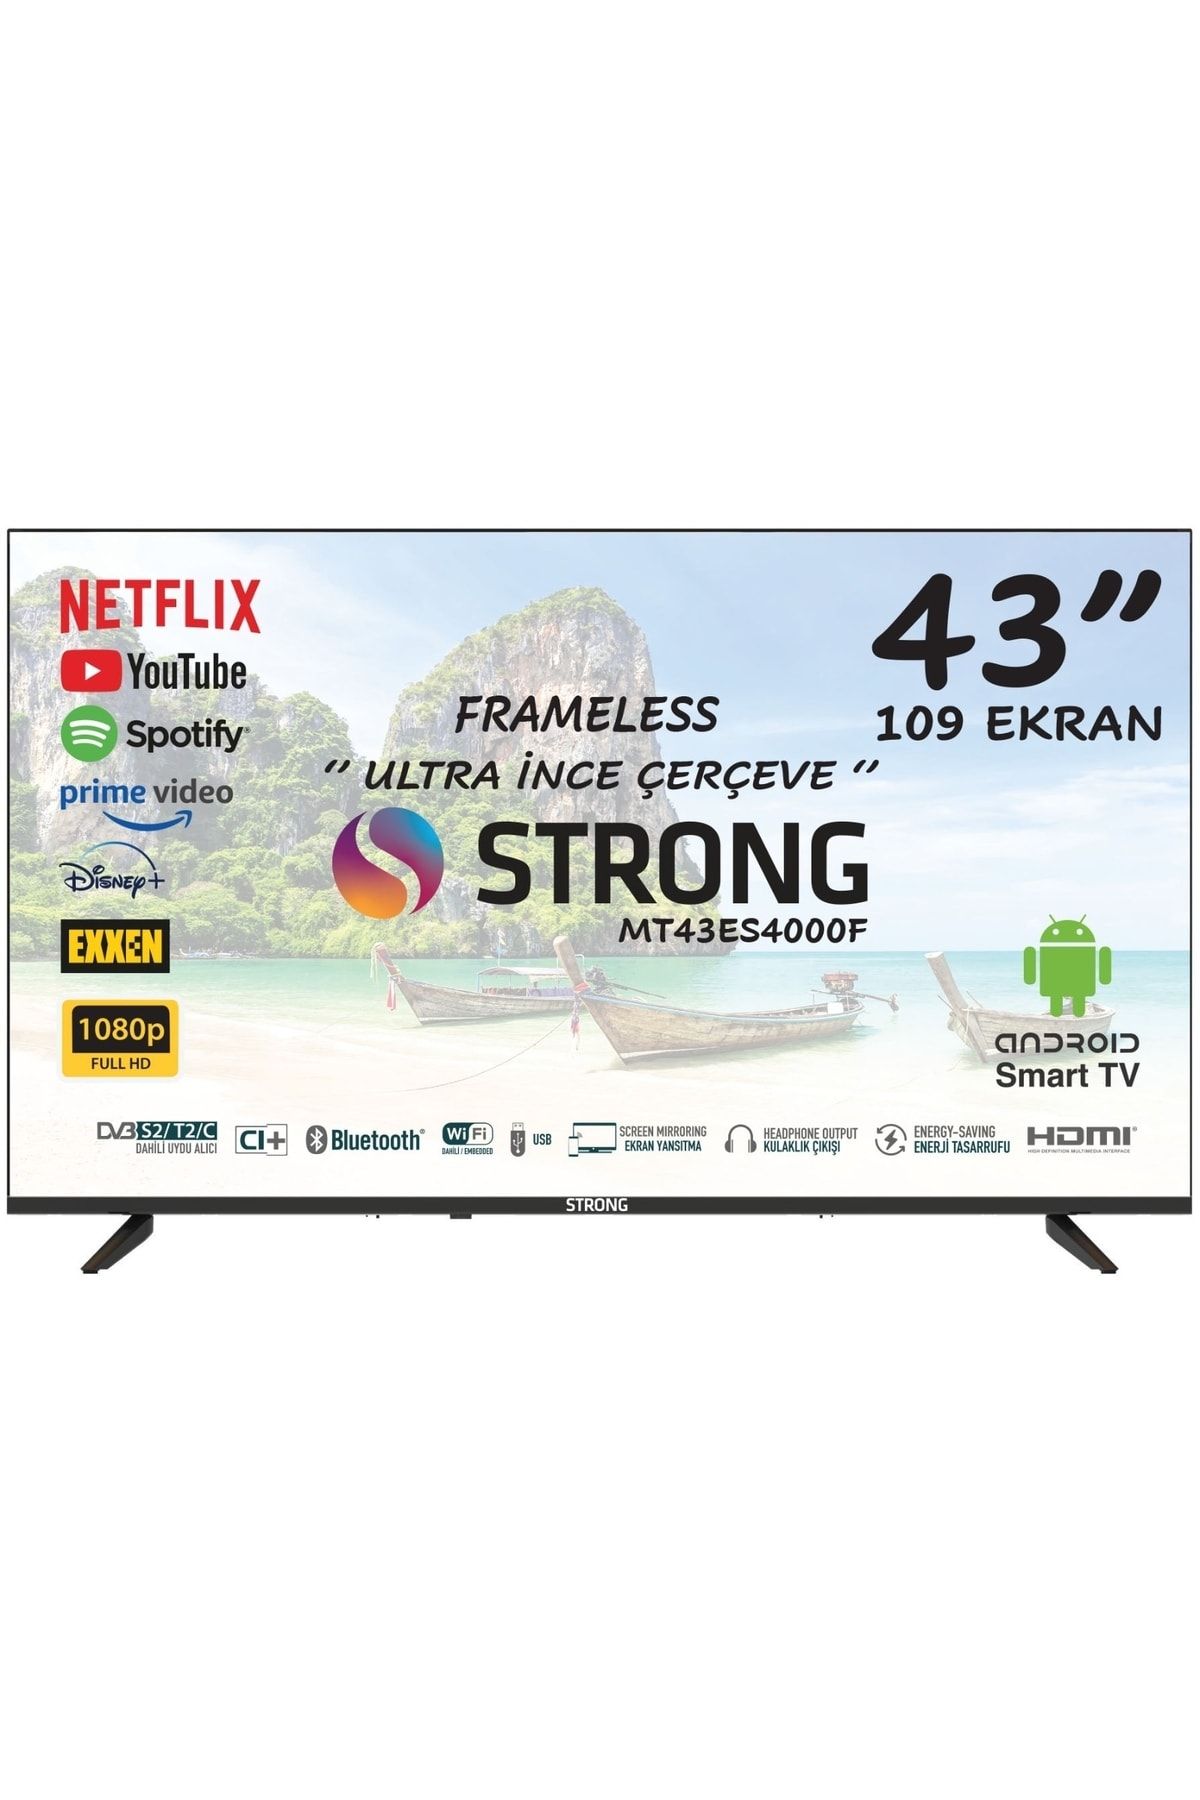 Strong MT43ES4000F 43" 109 Ekran Uydu Alıcılı Full HD Android Smart LED TV